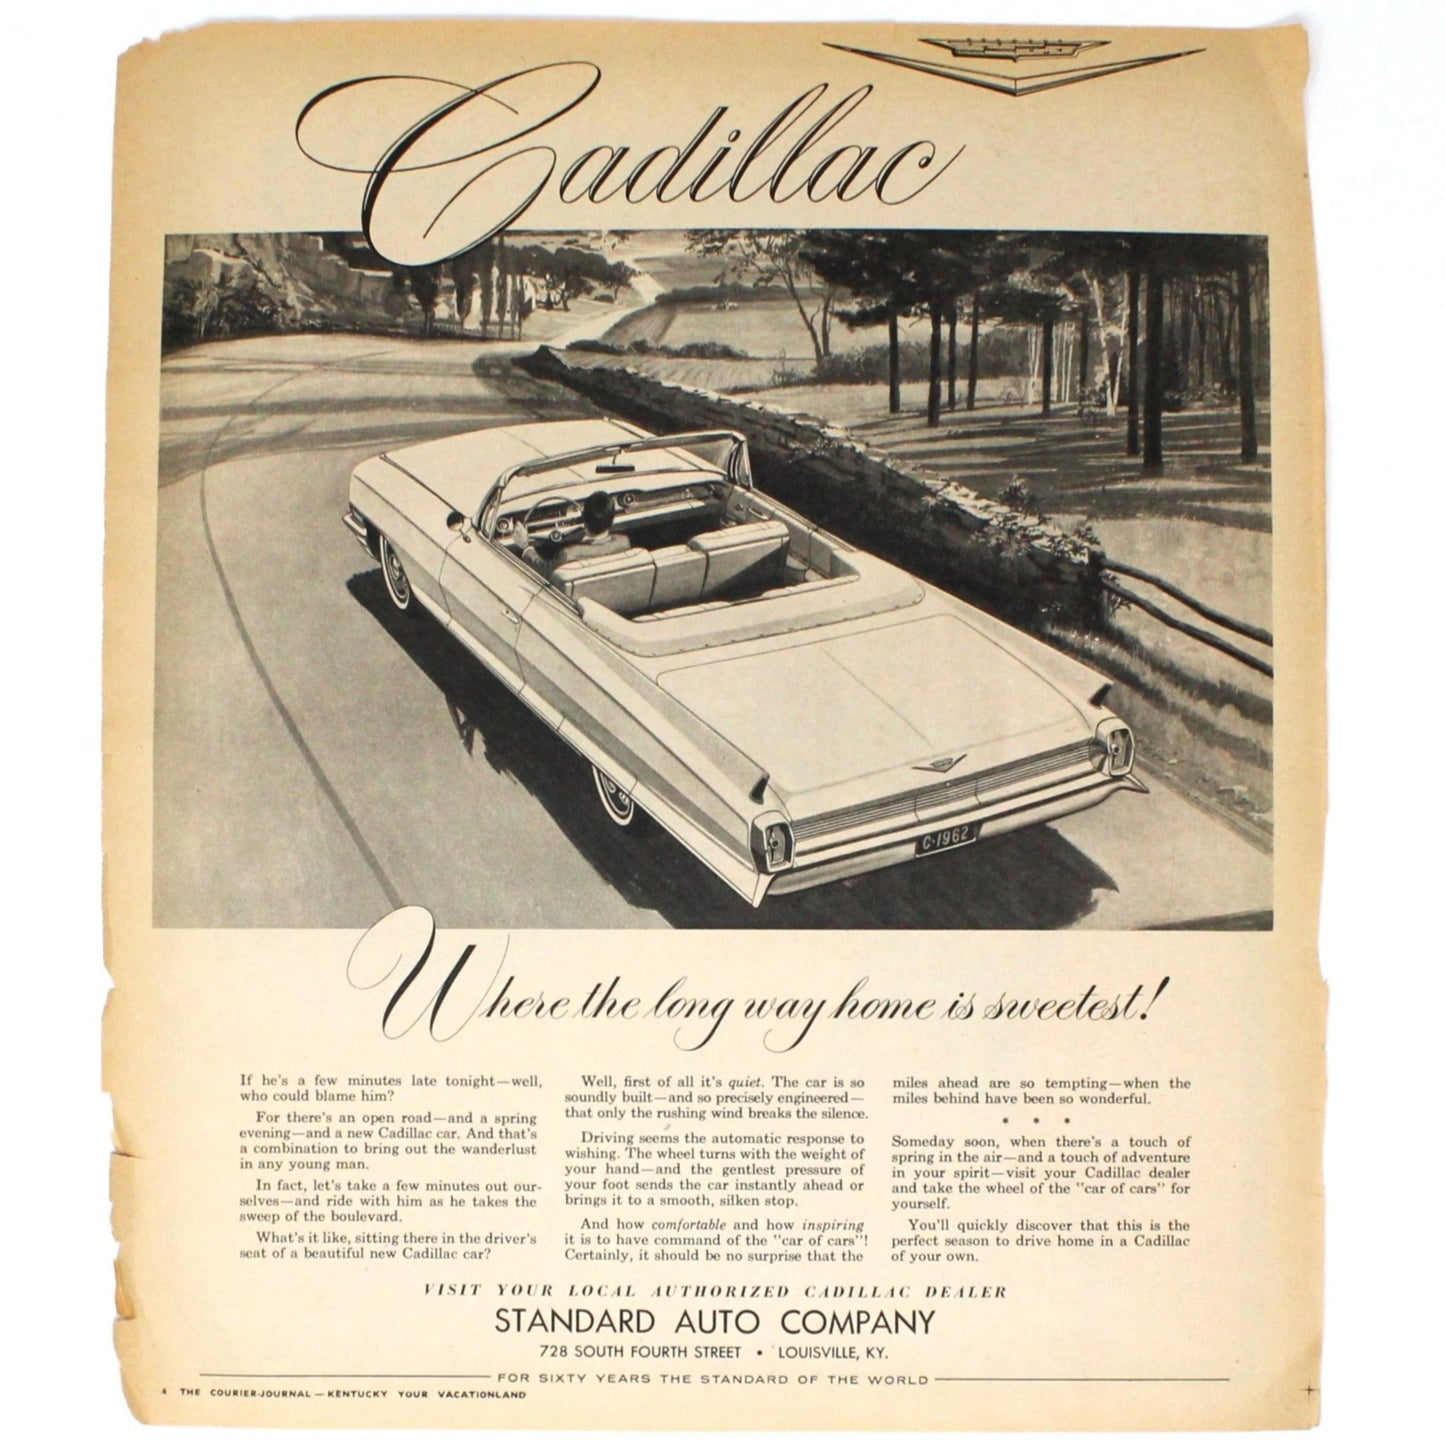 Advertisement, Cadillac Standard Auto Company, Original 1962 Magazine Ad, Vintage